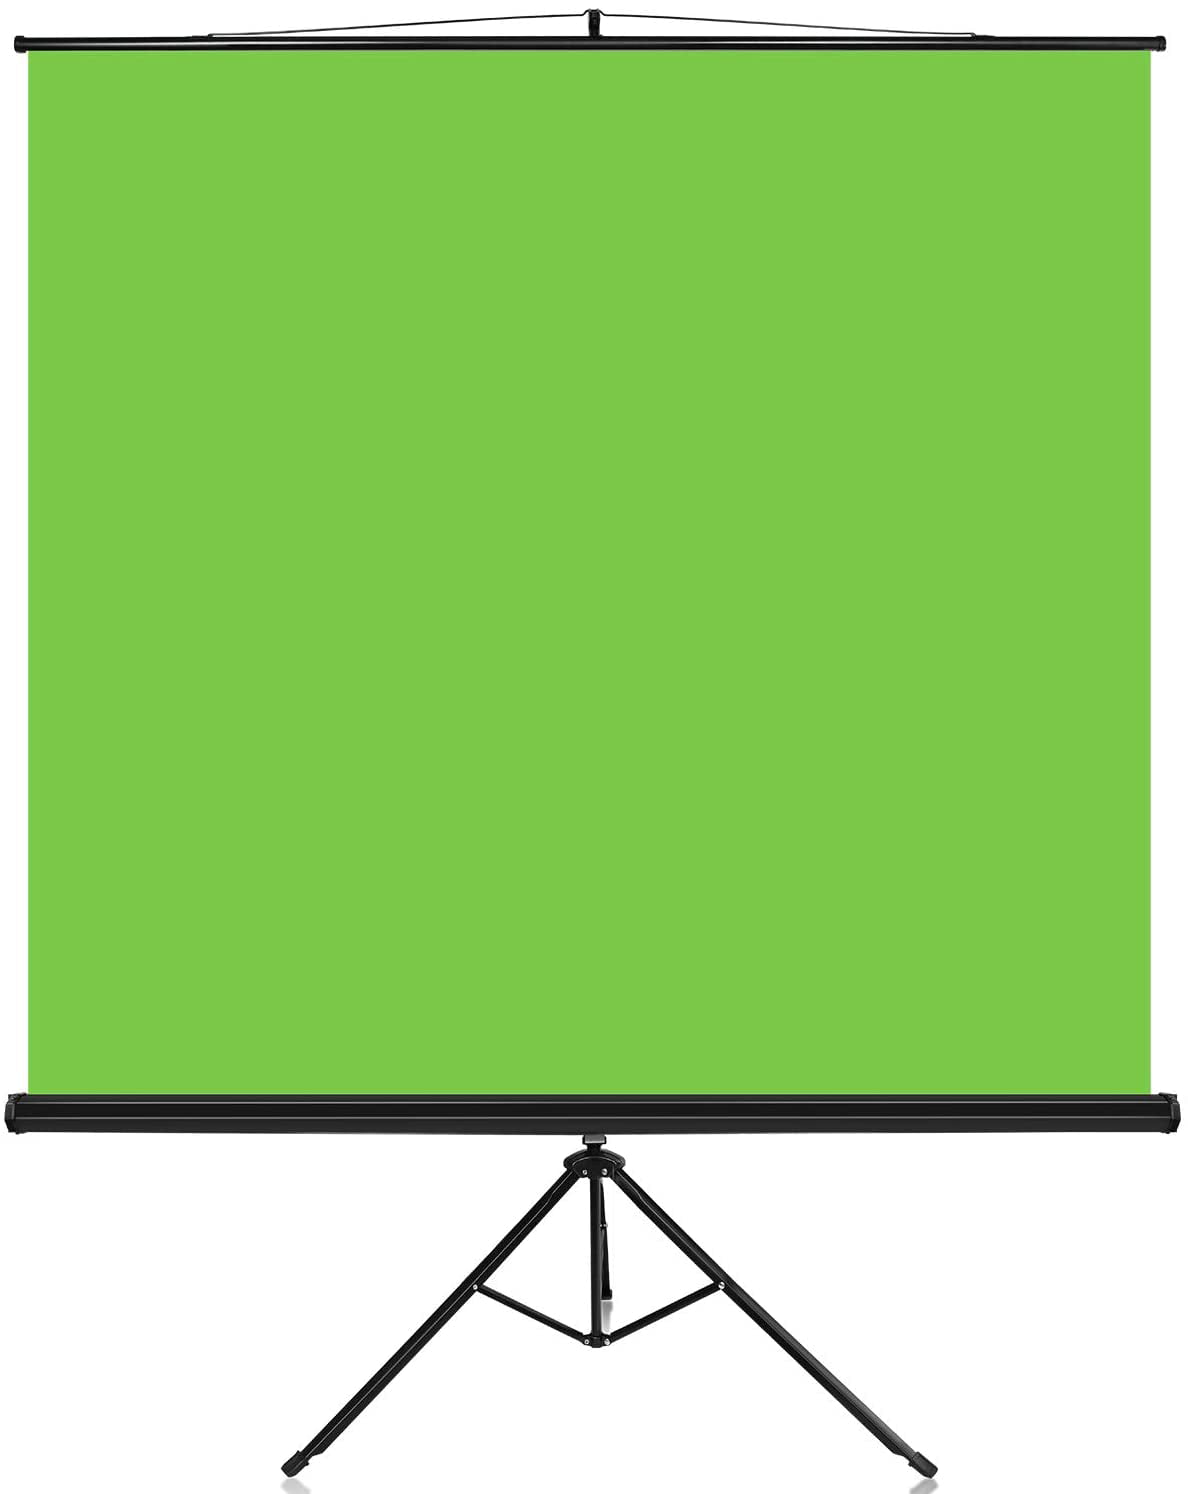 HIFUAR 9 x 6 ft Green Screen Green Chromakey Panel for Photo Backdrop Video Studio 4 Backdrop Clip Green Photography Backdrop Background Muslin Background Screen for Photo Video Studio 